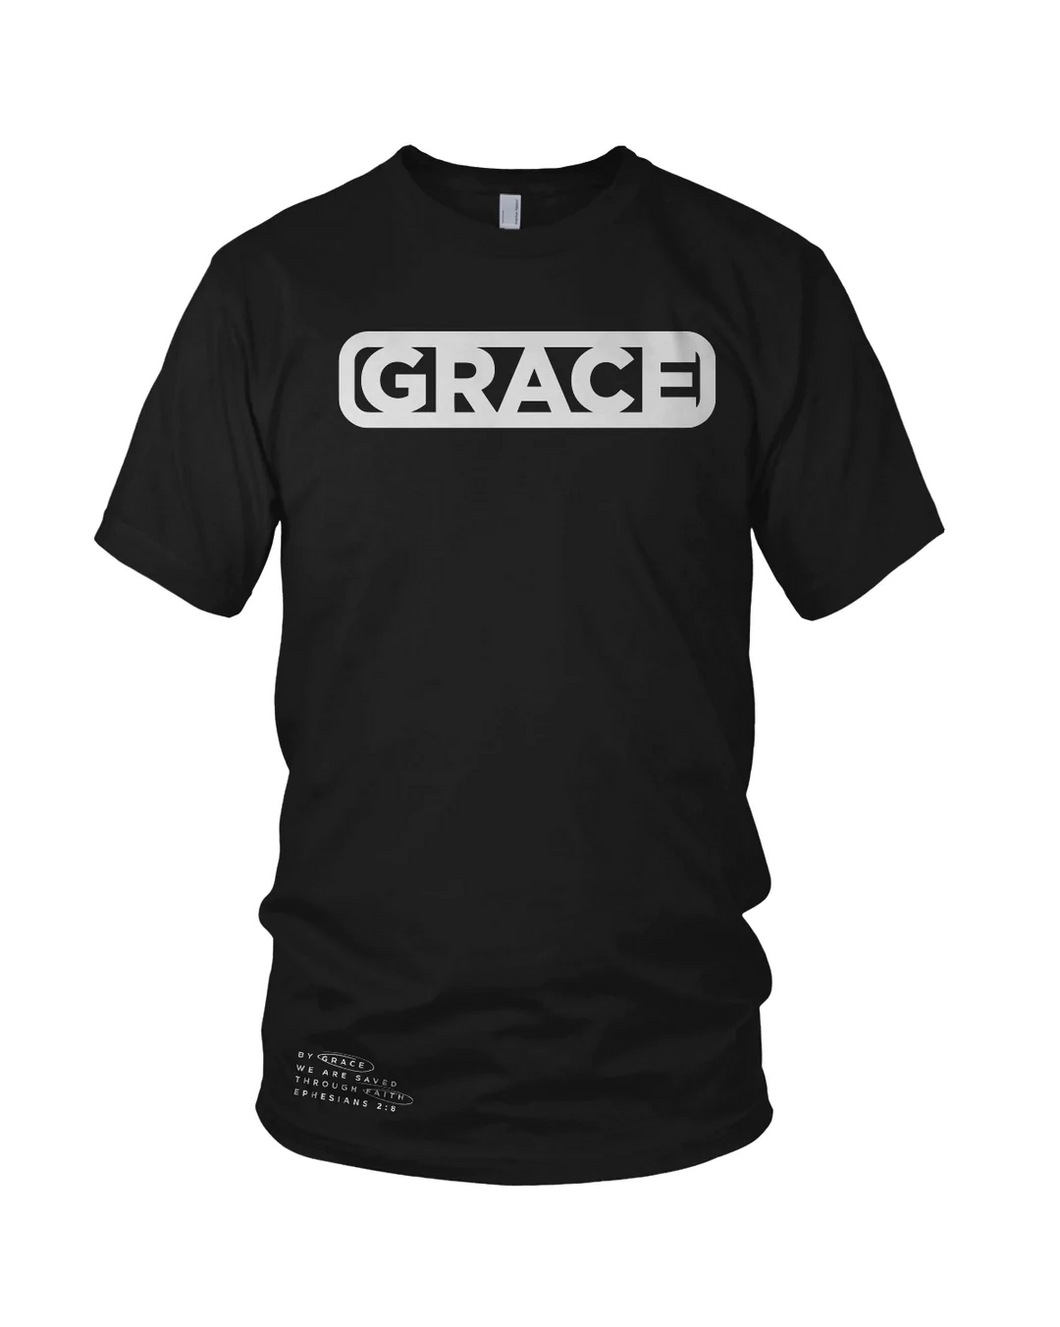 Grace Tees